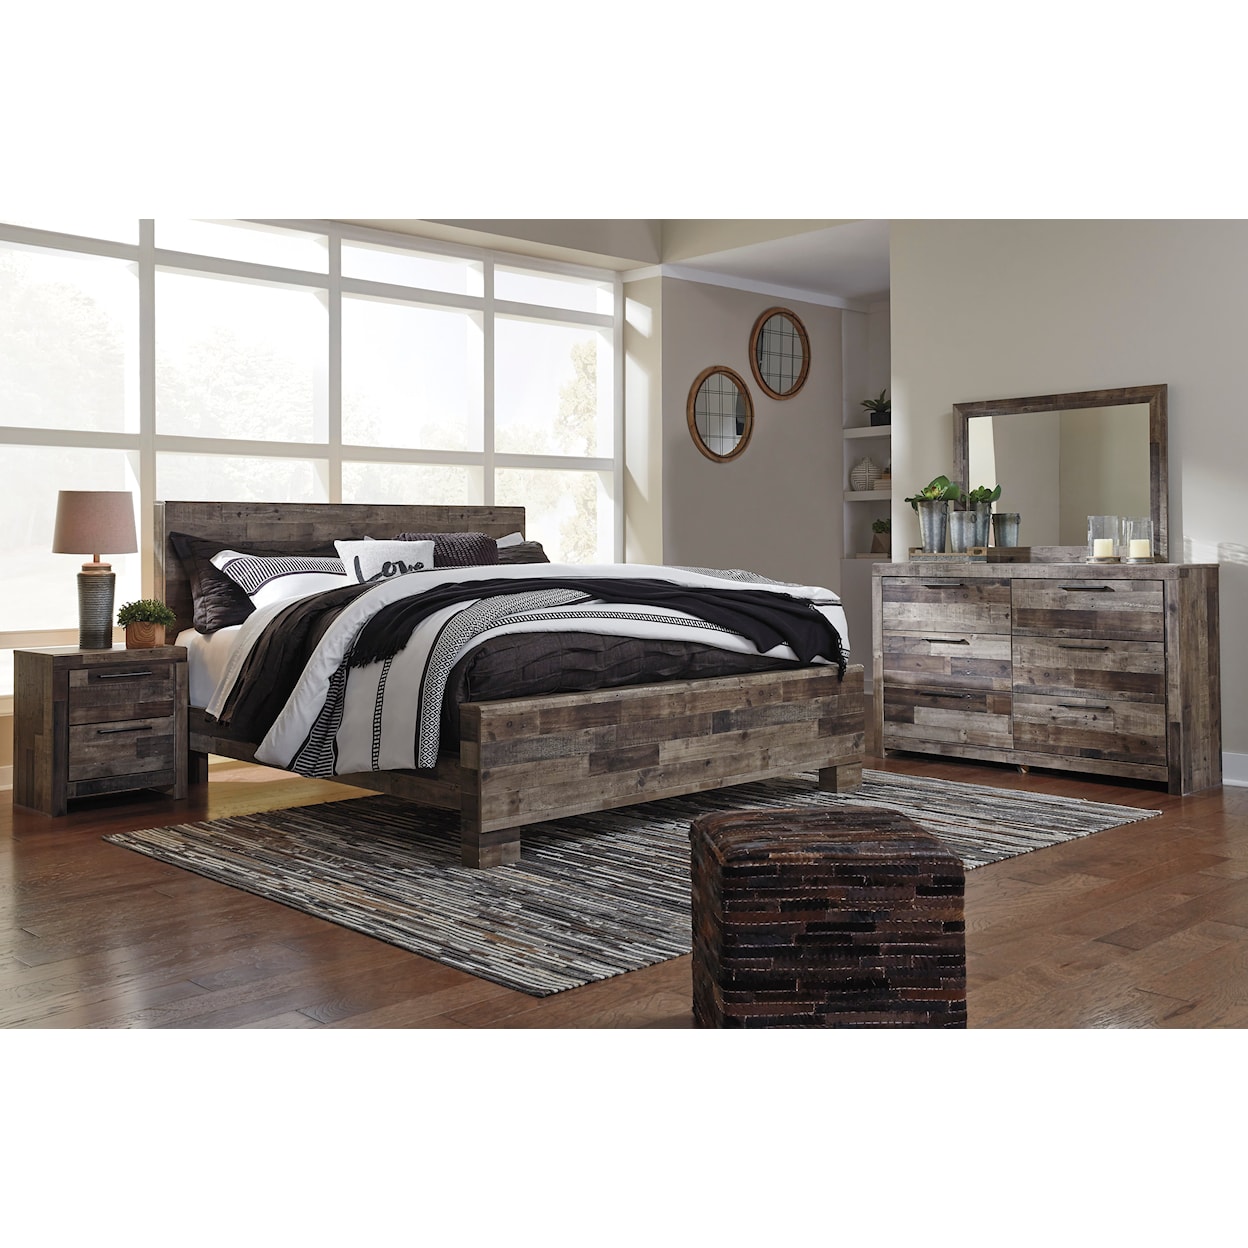 Ashley Furniture Benchcraft Derekson California King Bedroom Set